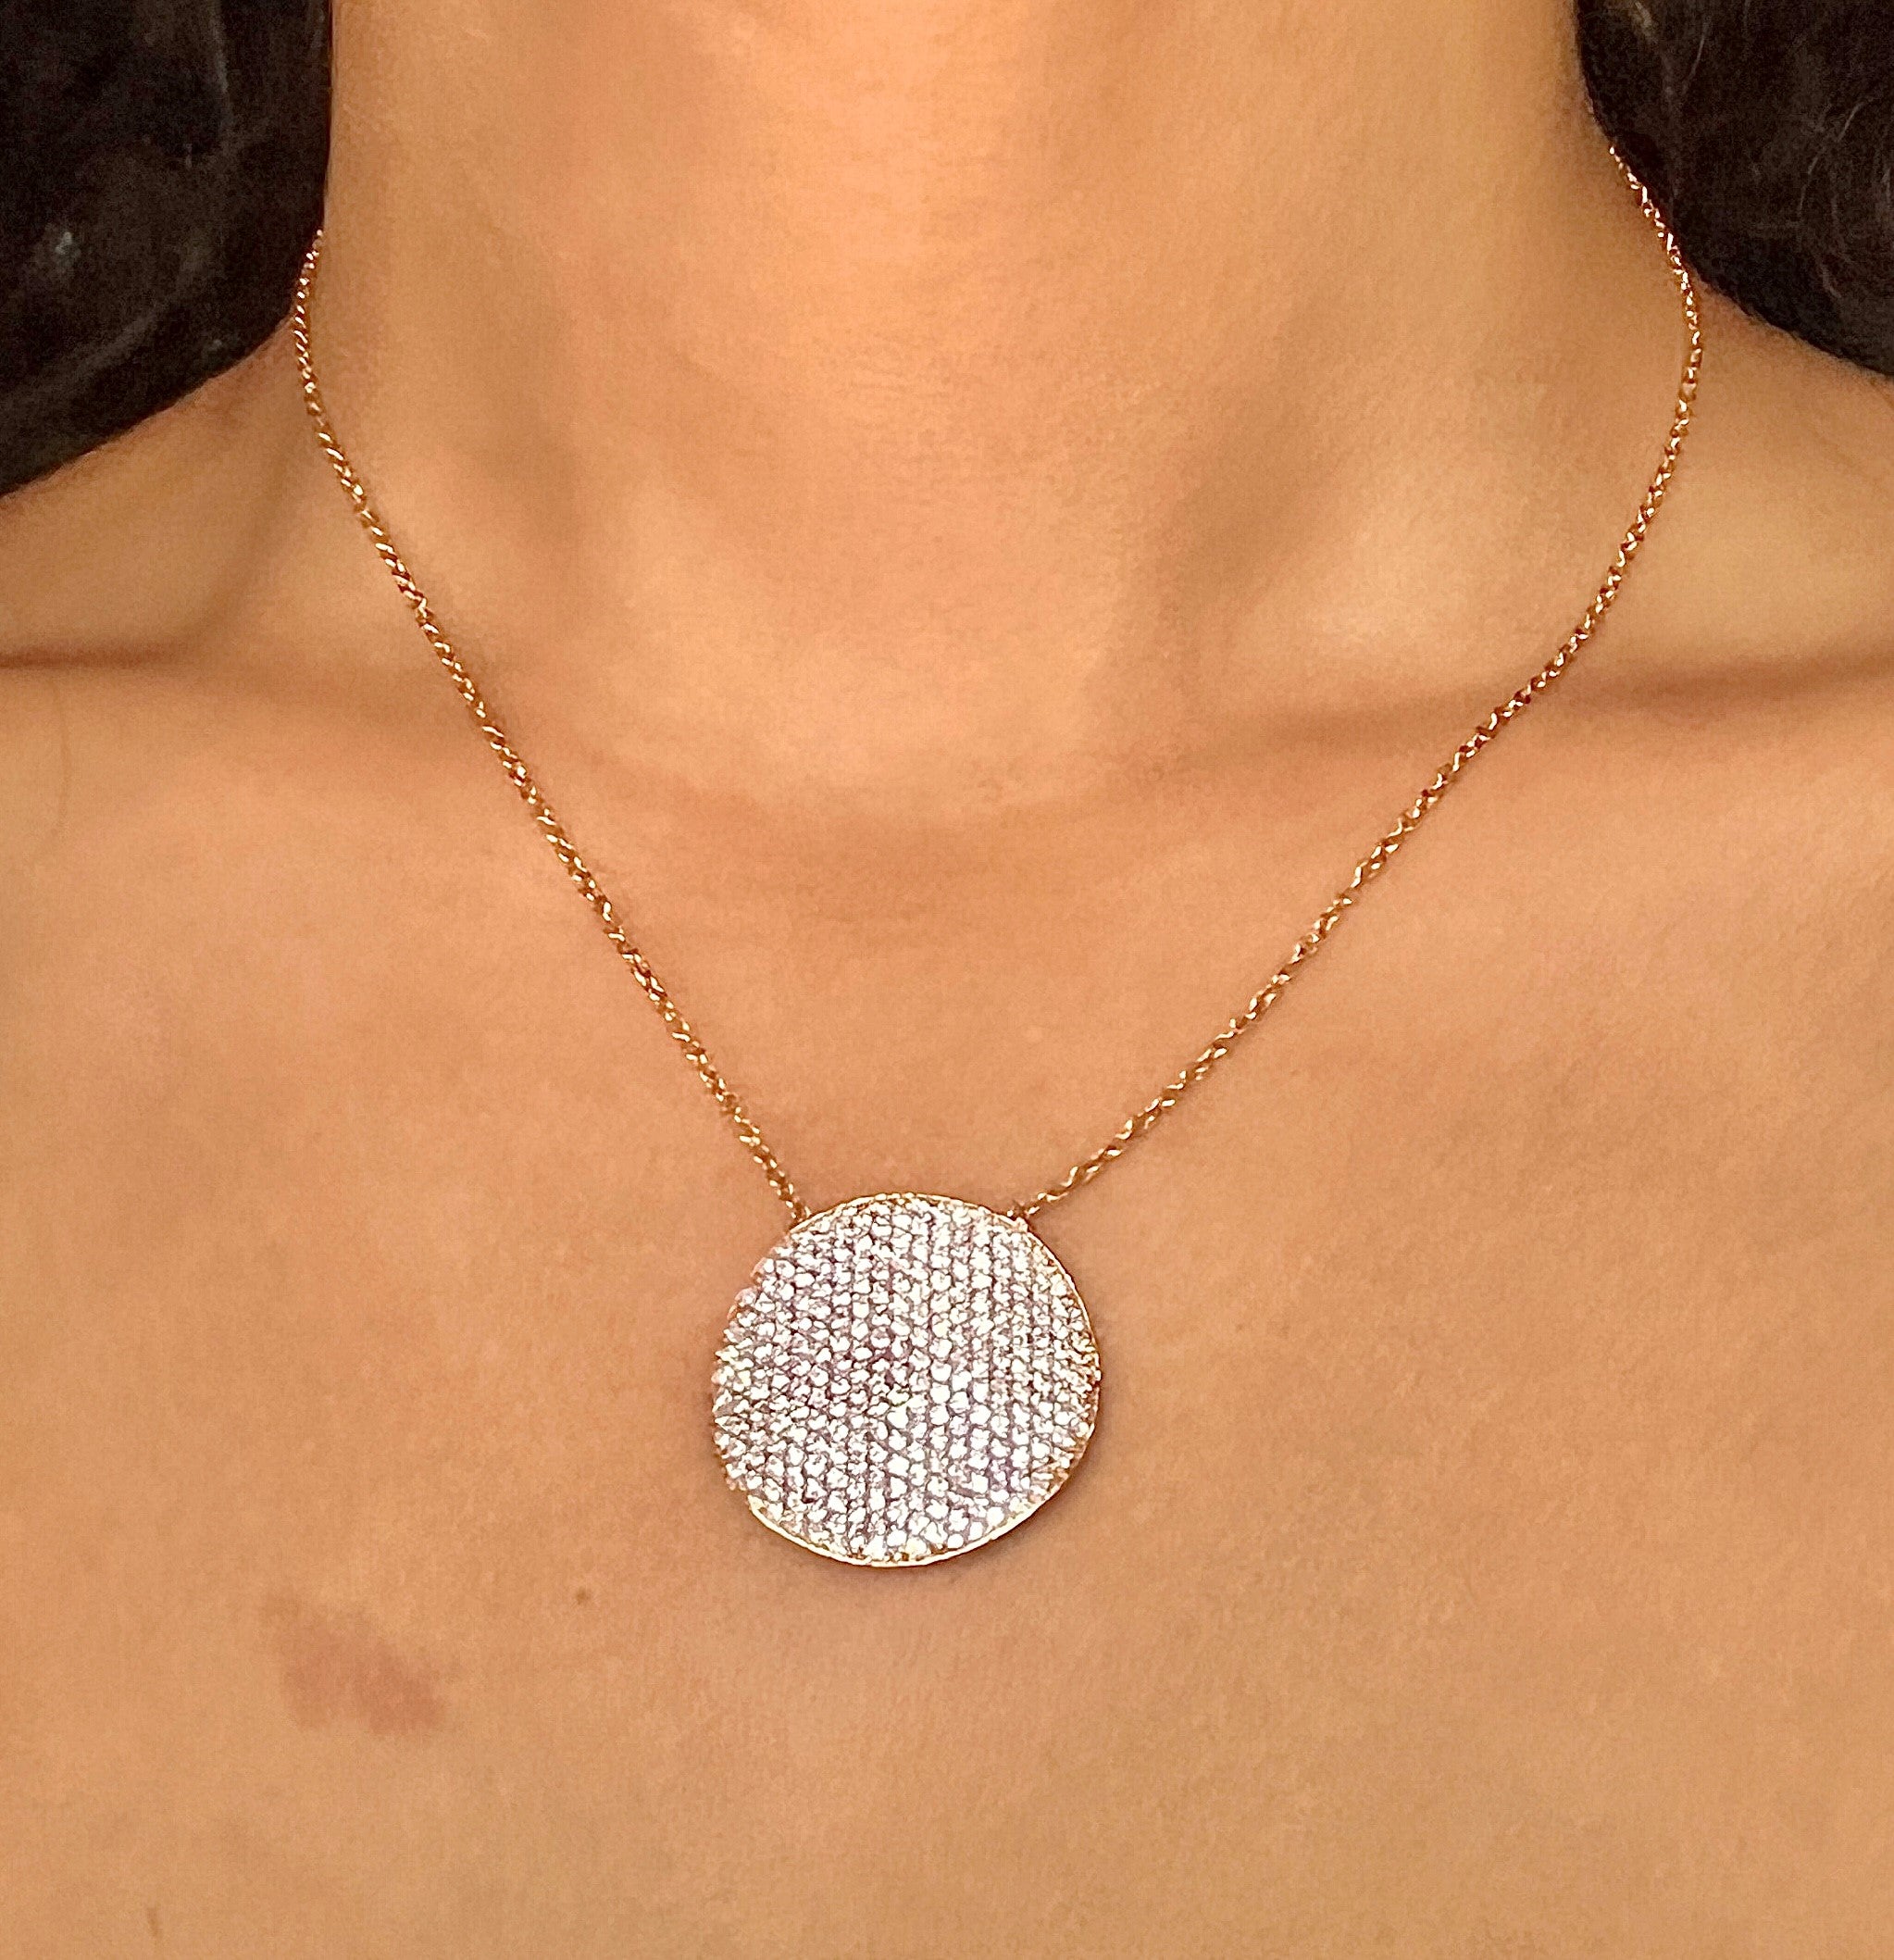 Pierre Cardin Vintage Scorpio Zodiac Pendant Necklace with Genuine Diamond  Chip on an 18k Gold-Plated Chain — sororité.